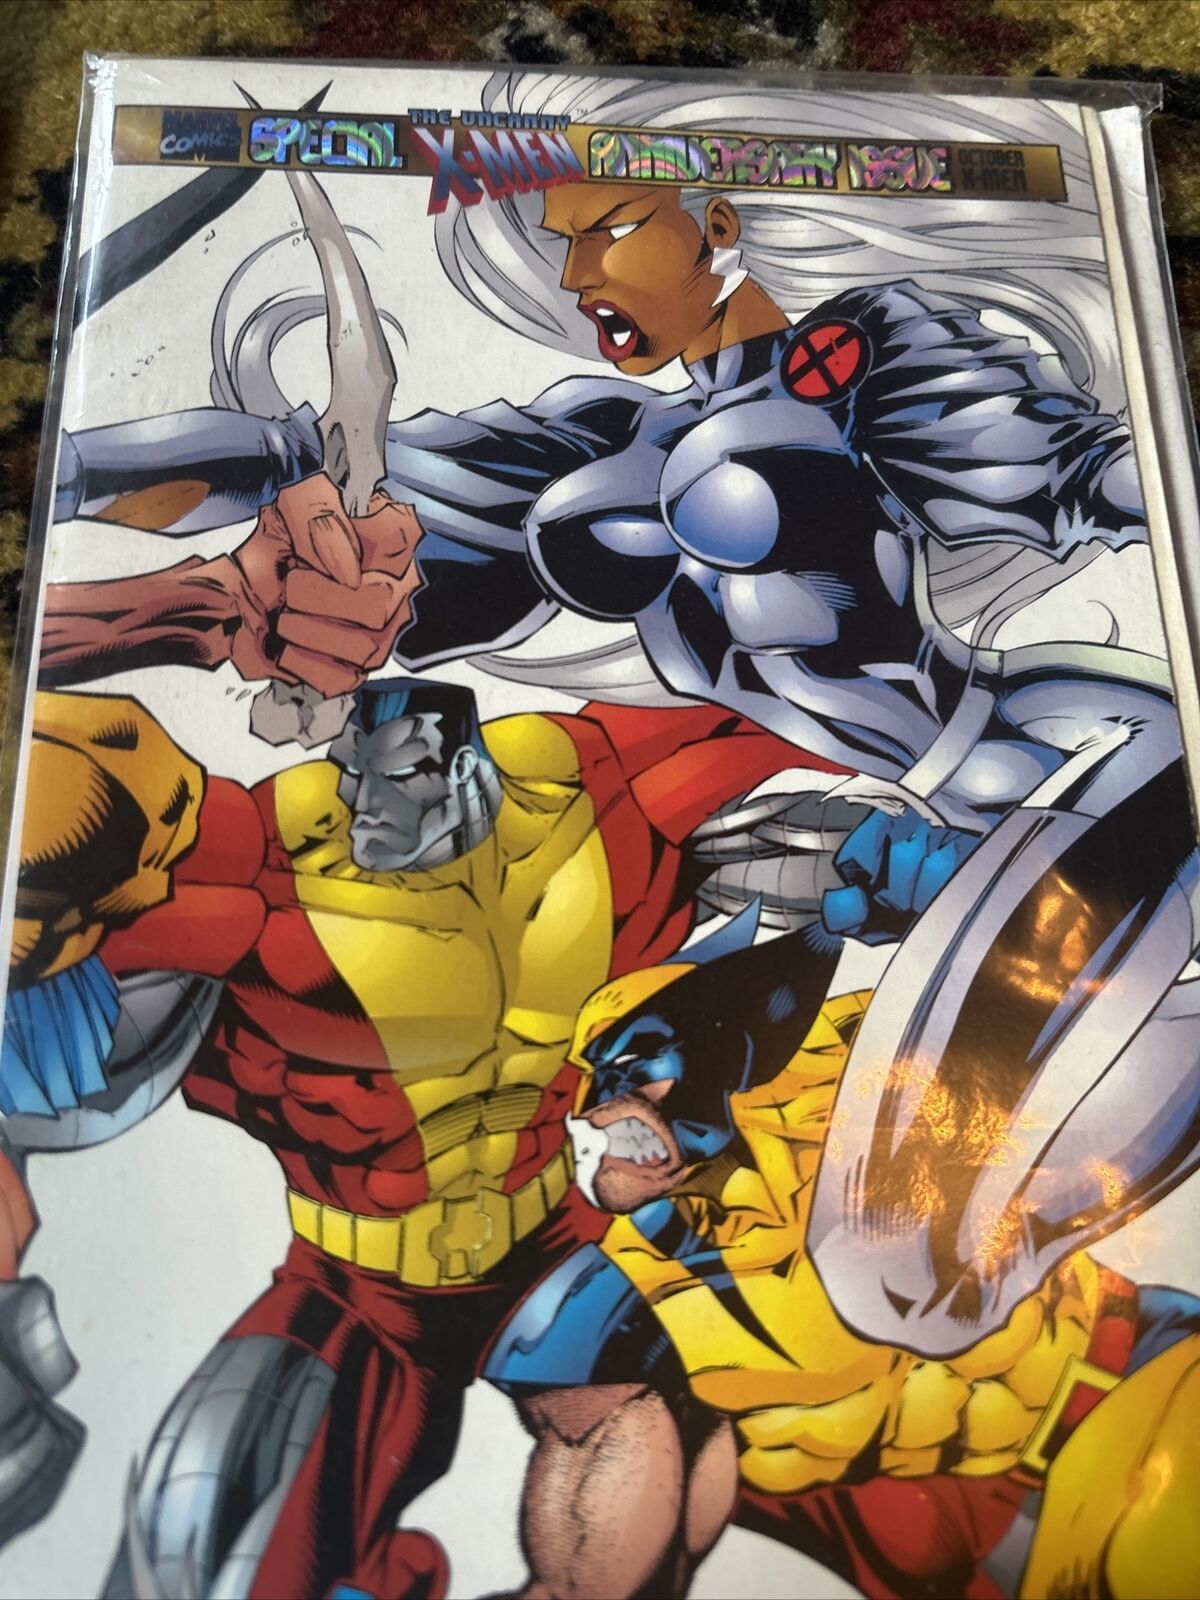 The uncanny X-Men anniversary issue